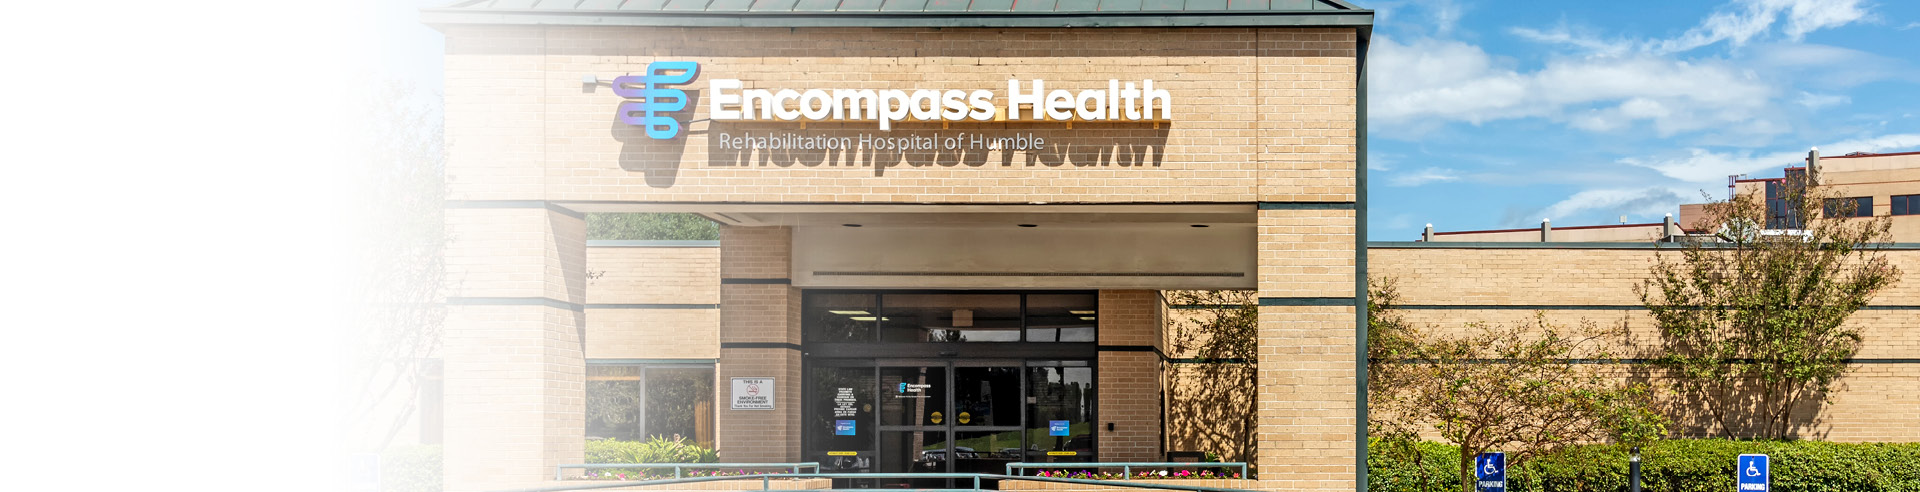 Encompass Health Rehabilitation Hospital of Humble exterior